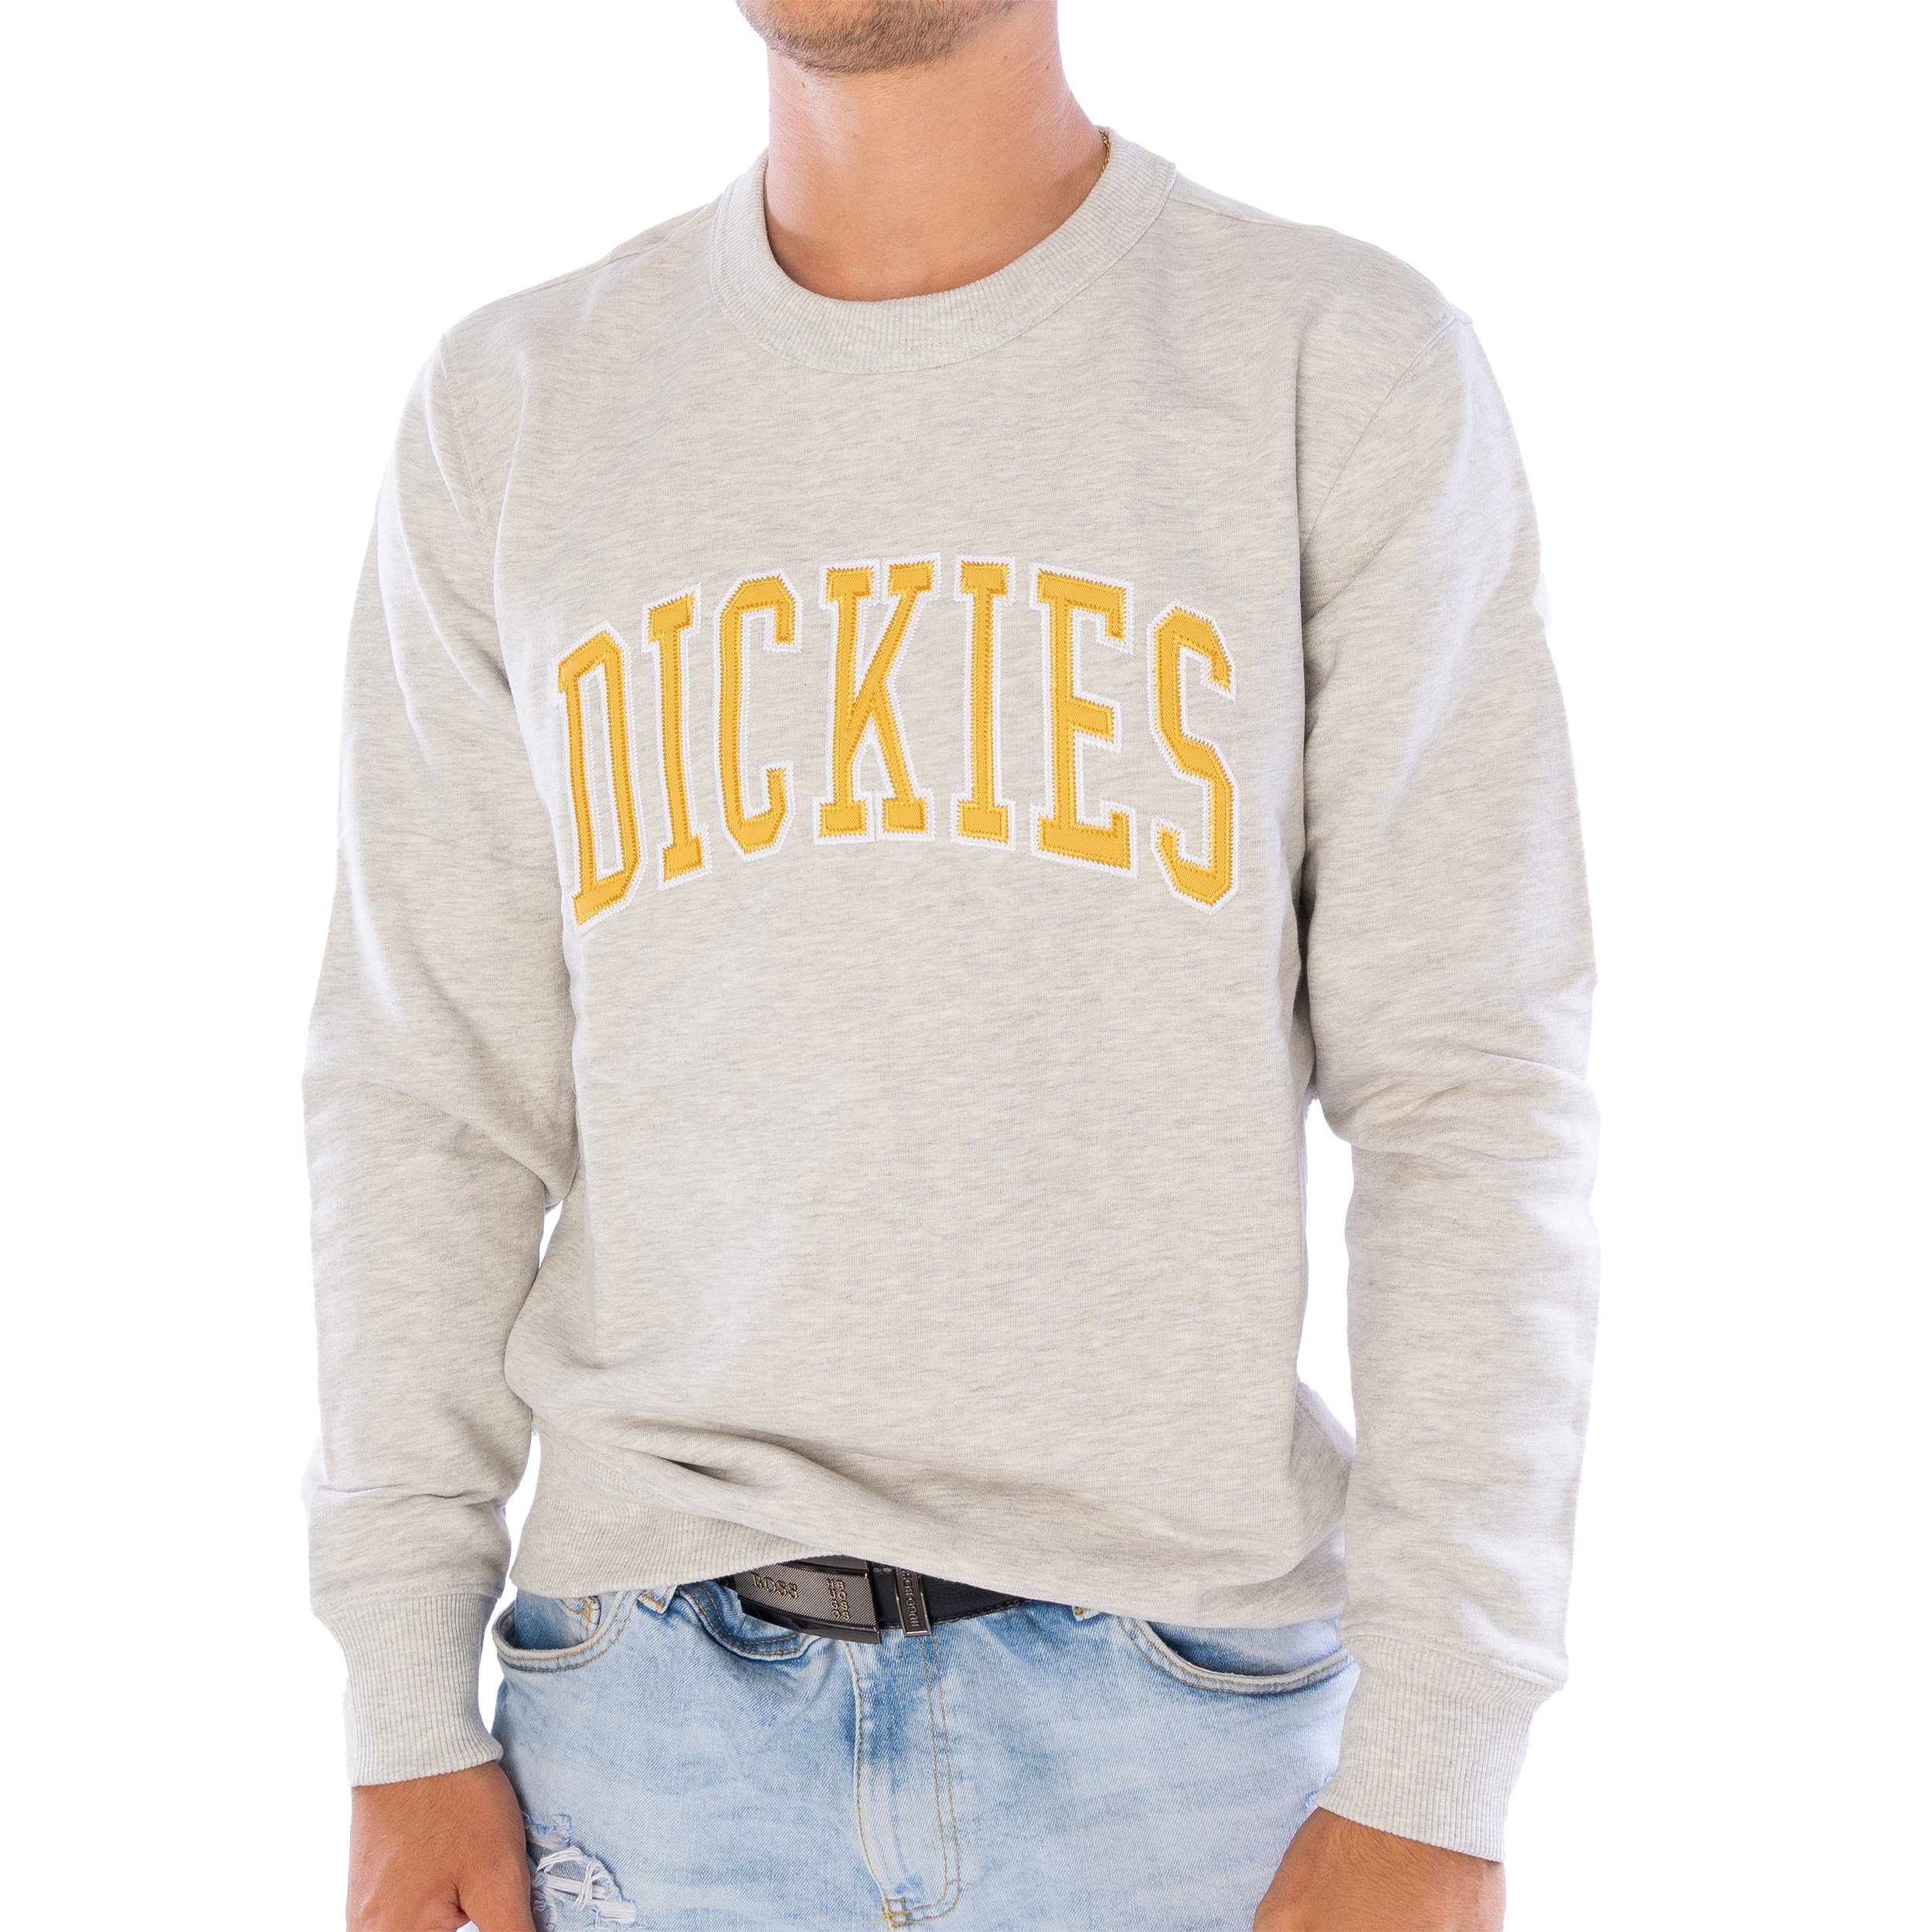 Dickies Sweater Sweatpulli Dickies Aitkin, G L, F grey-melange/honey Sweatpulli mit Rundhalsausschnitt